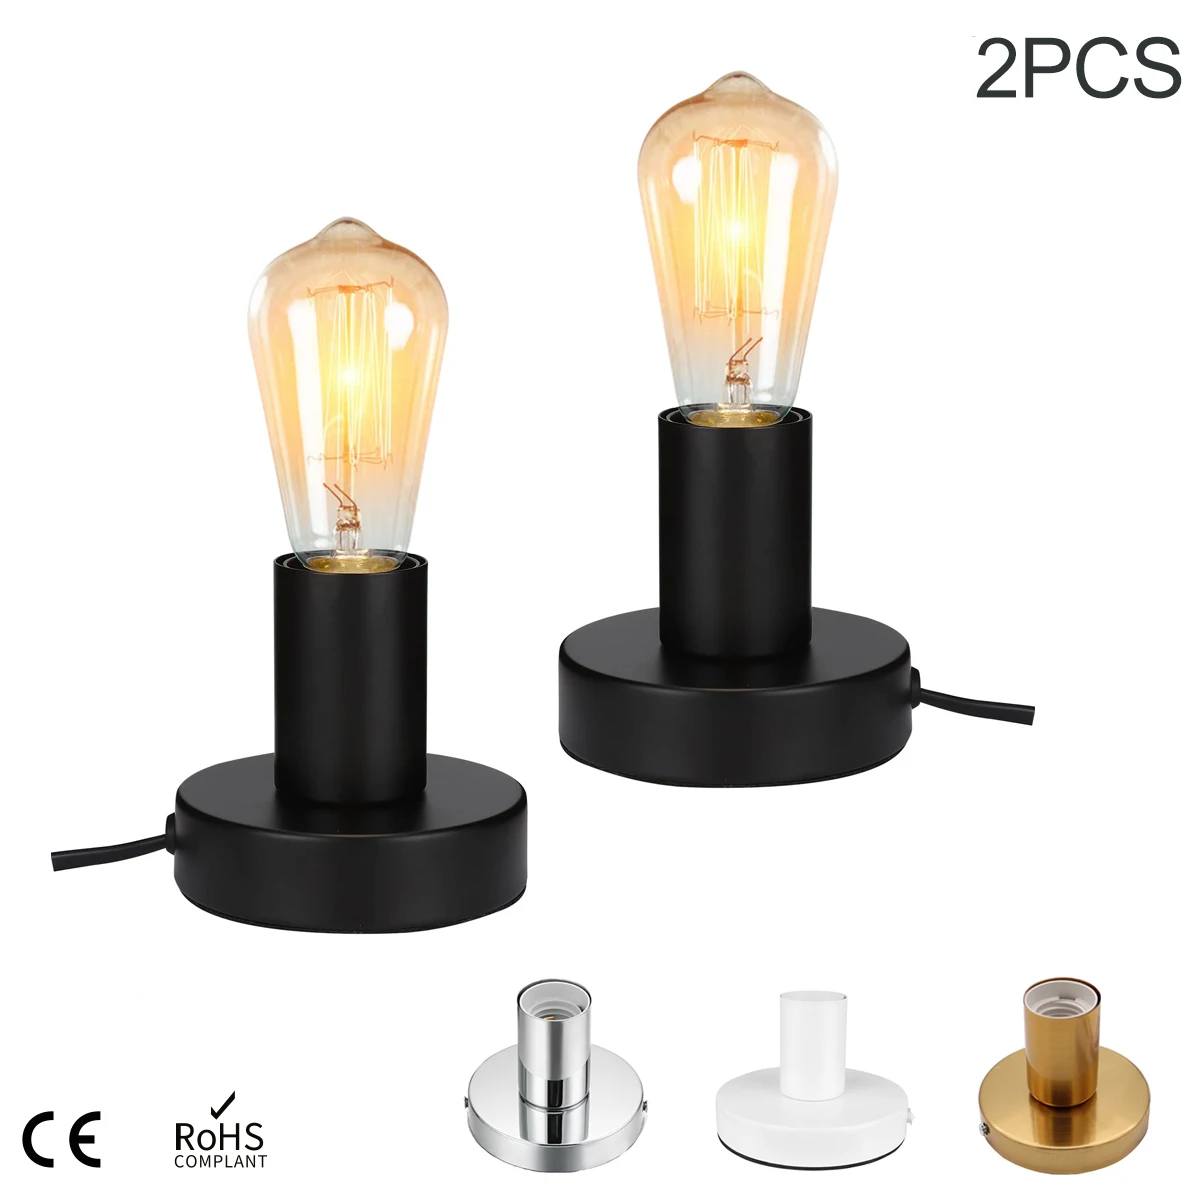 

2PCS E26 E27 Polished Metal Table Lamp Base EU Plug 220V 1.8cm Cord Vintage Desktop Night Light for Bedroom Living Room